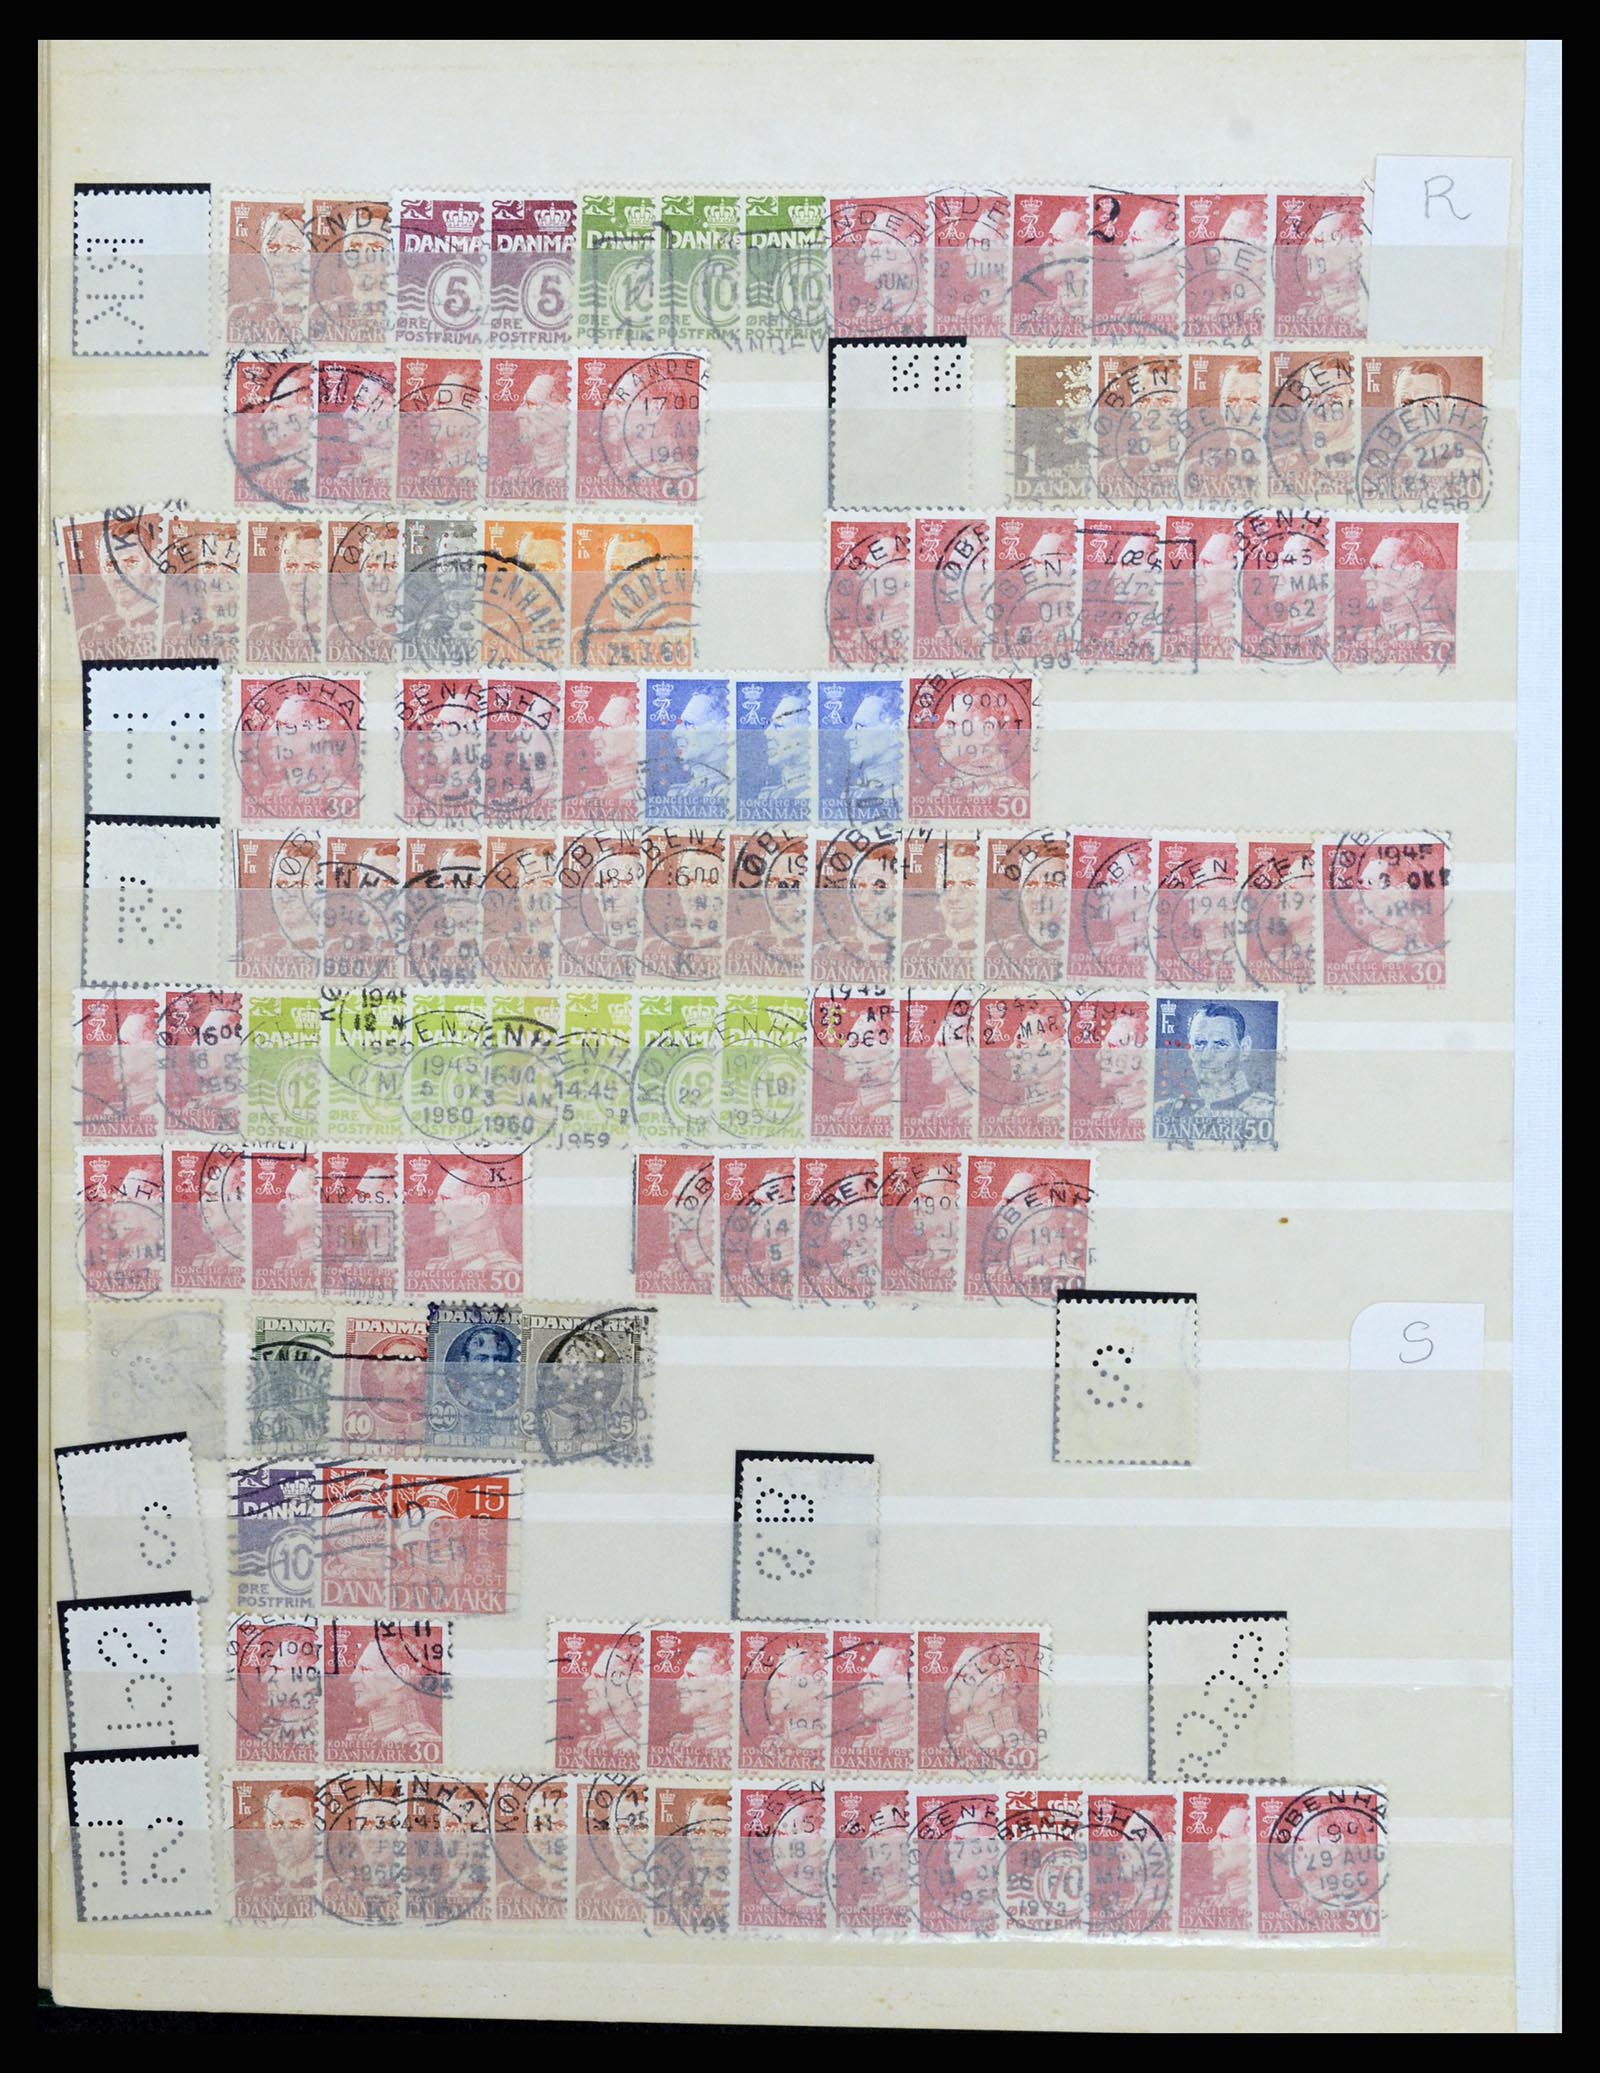 37056 088 - Stamp collection 37056 Denmark perfins.